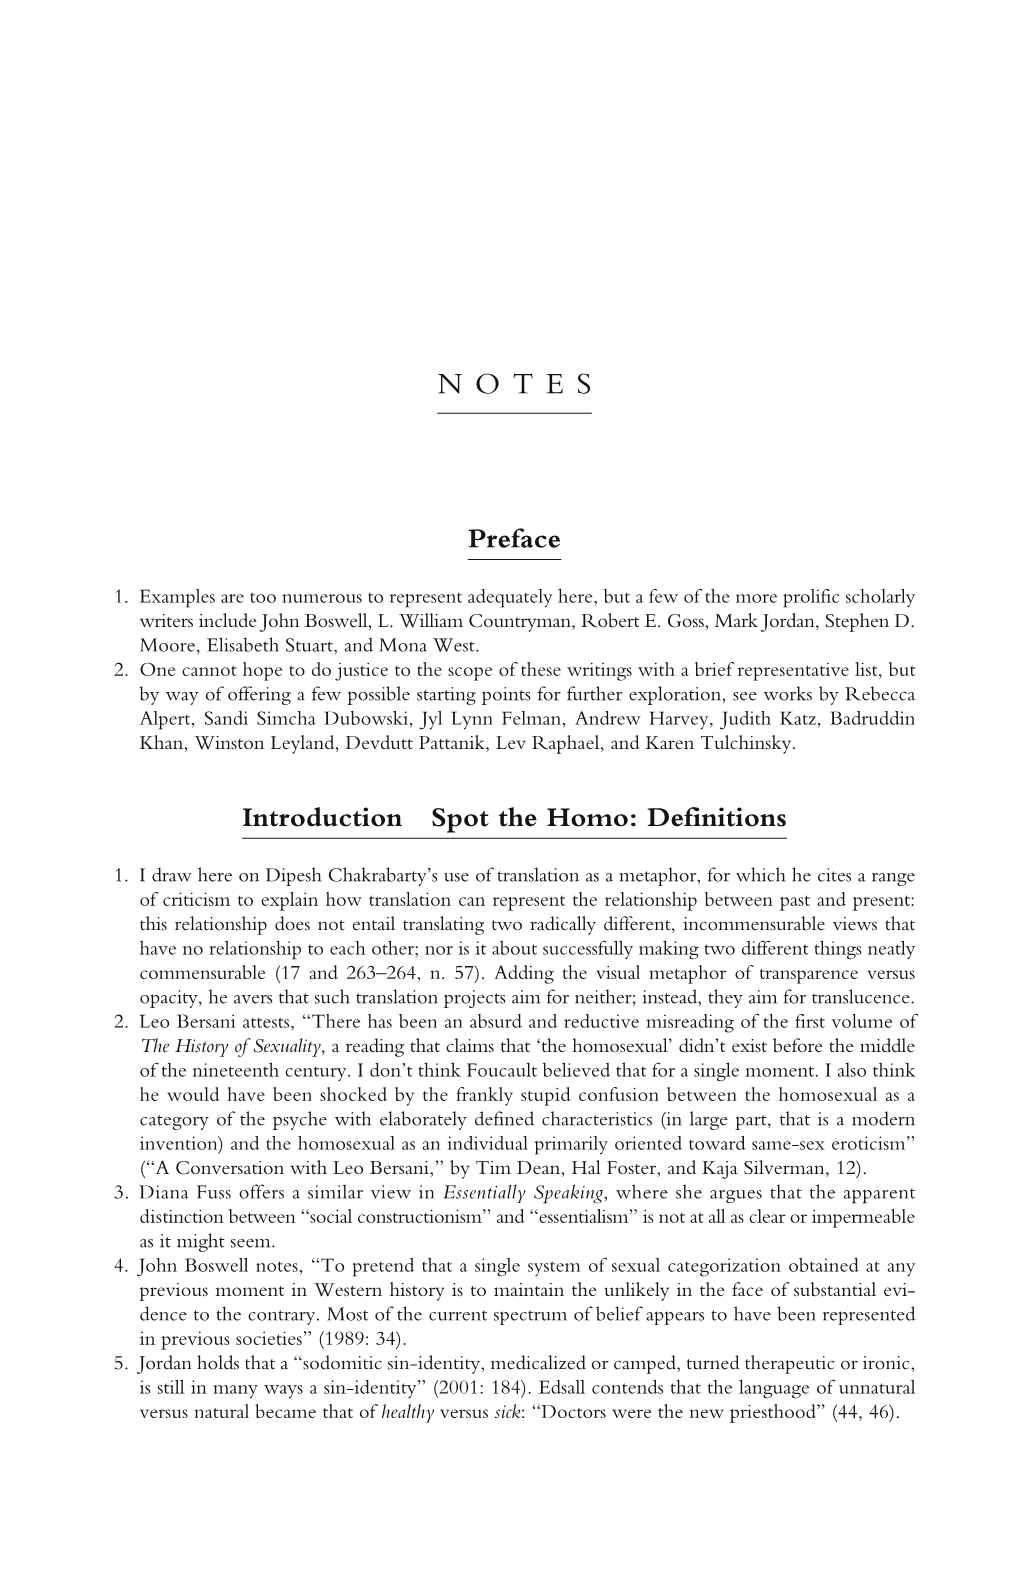 Preface Introduction Spot the Homo: Definitions